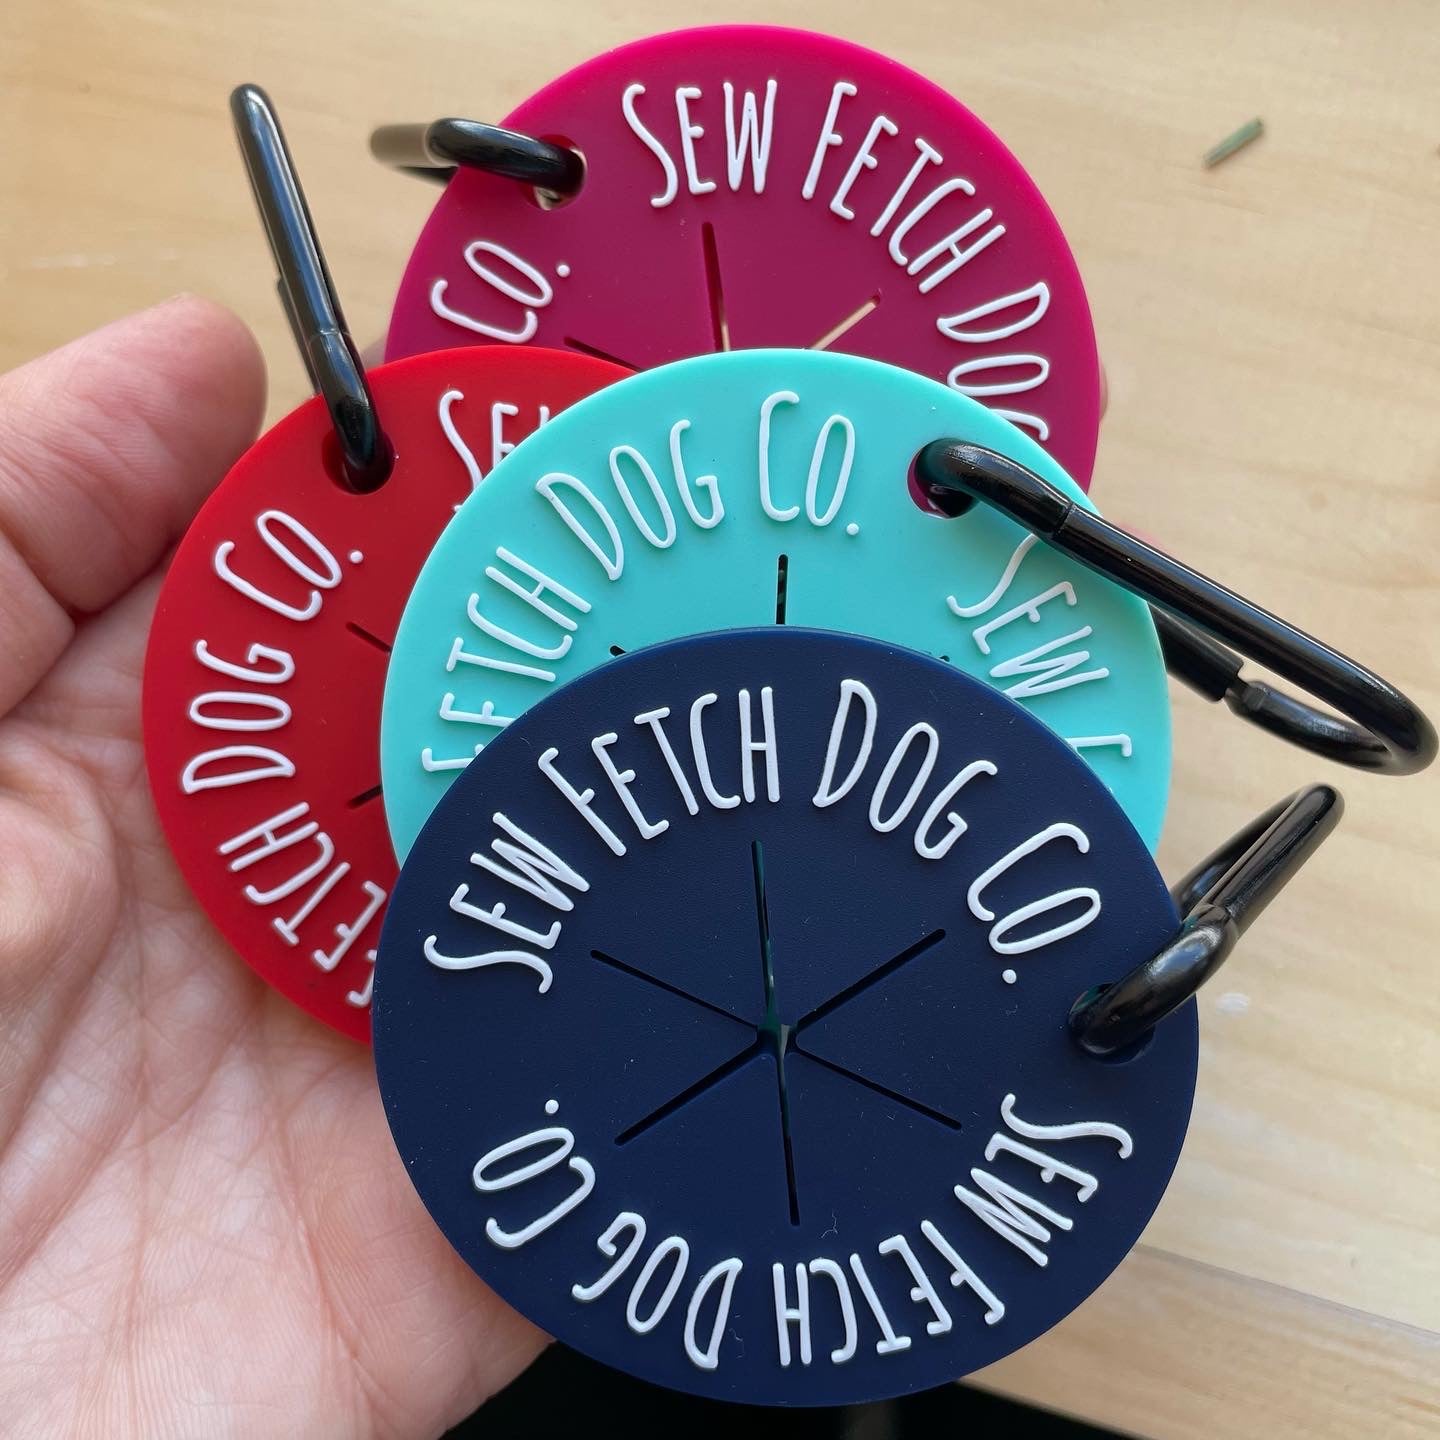 Poo Bag Carrier Disk - Sew Fetch Dog Company